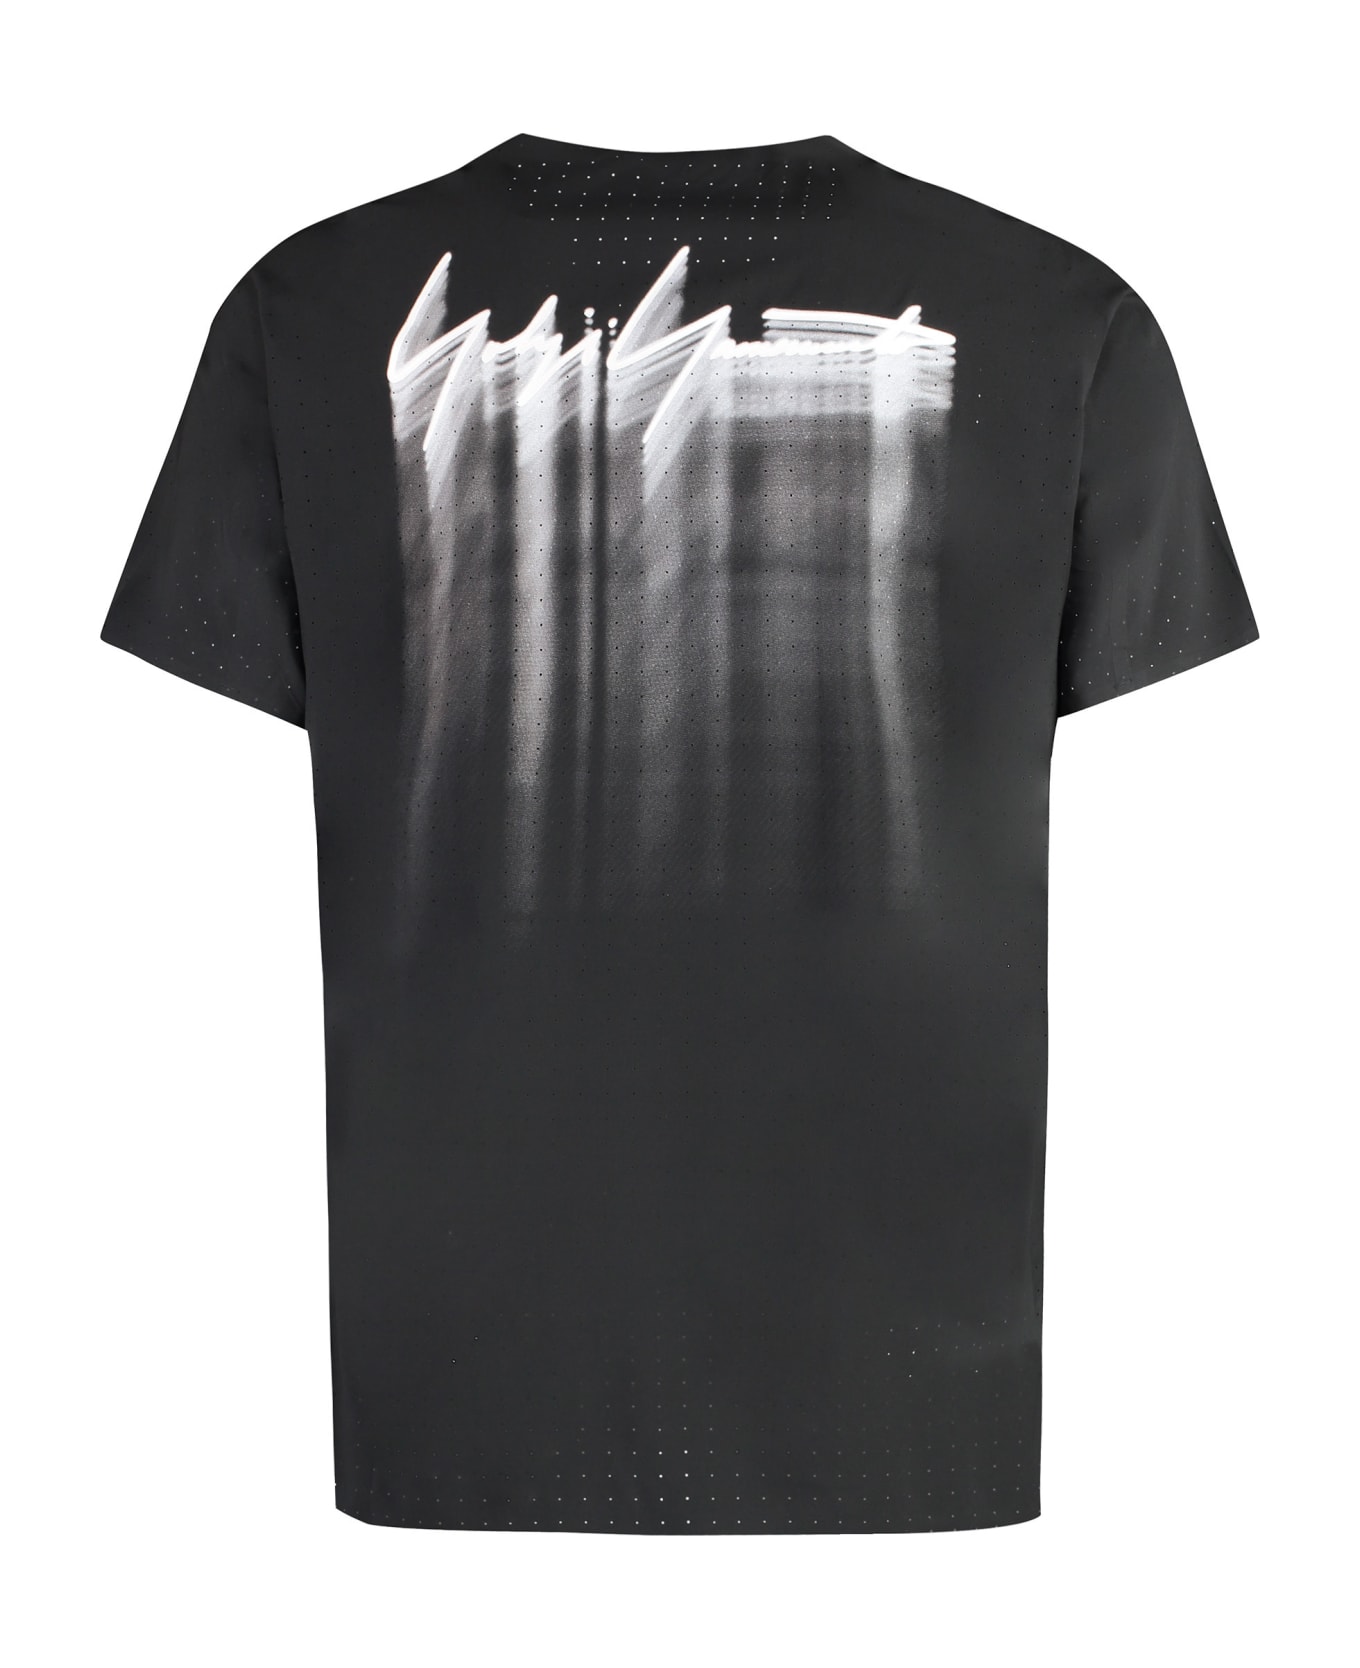 Y-3 Techno Fabric T-shirt - black